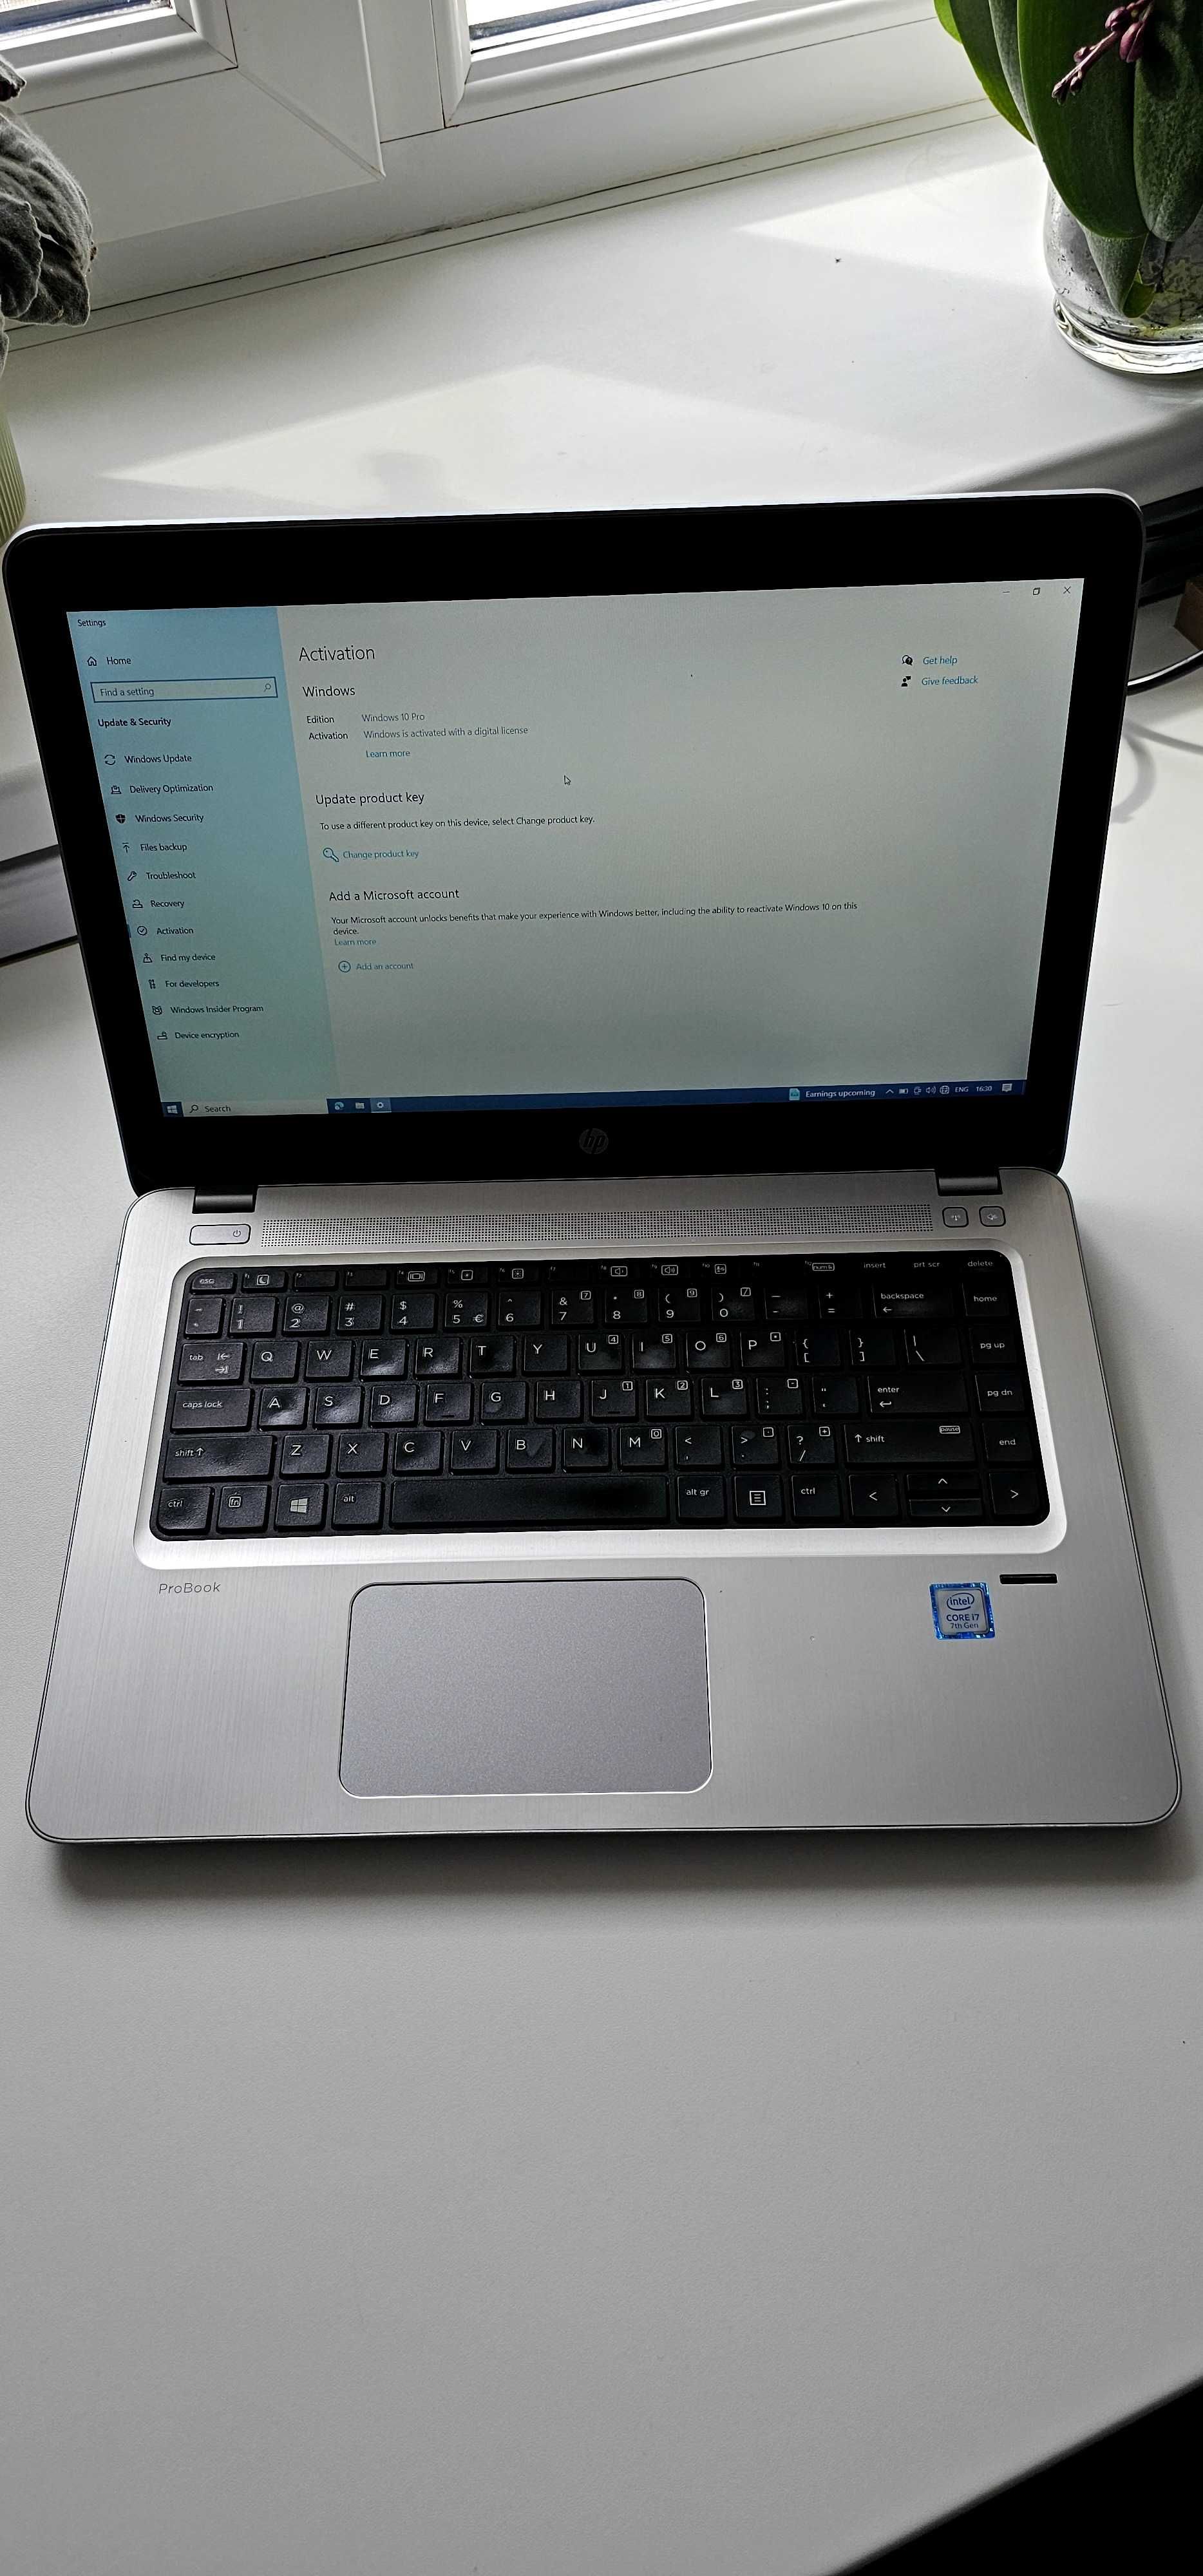 HP ProBook 440 G4, Intel Core i7-7500U CPU 2.70GHz 8GB DDR4 512GB SSD